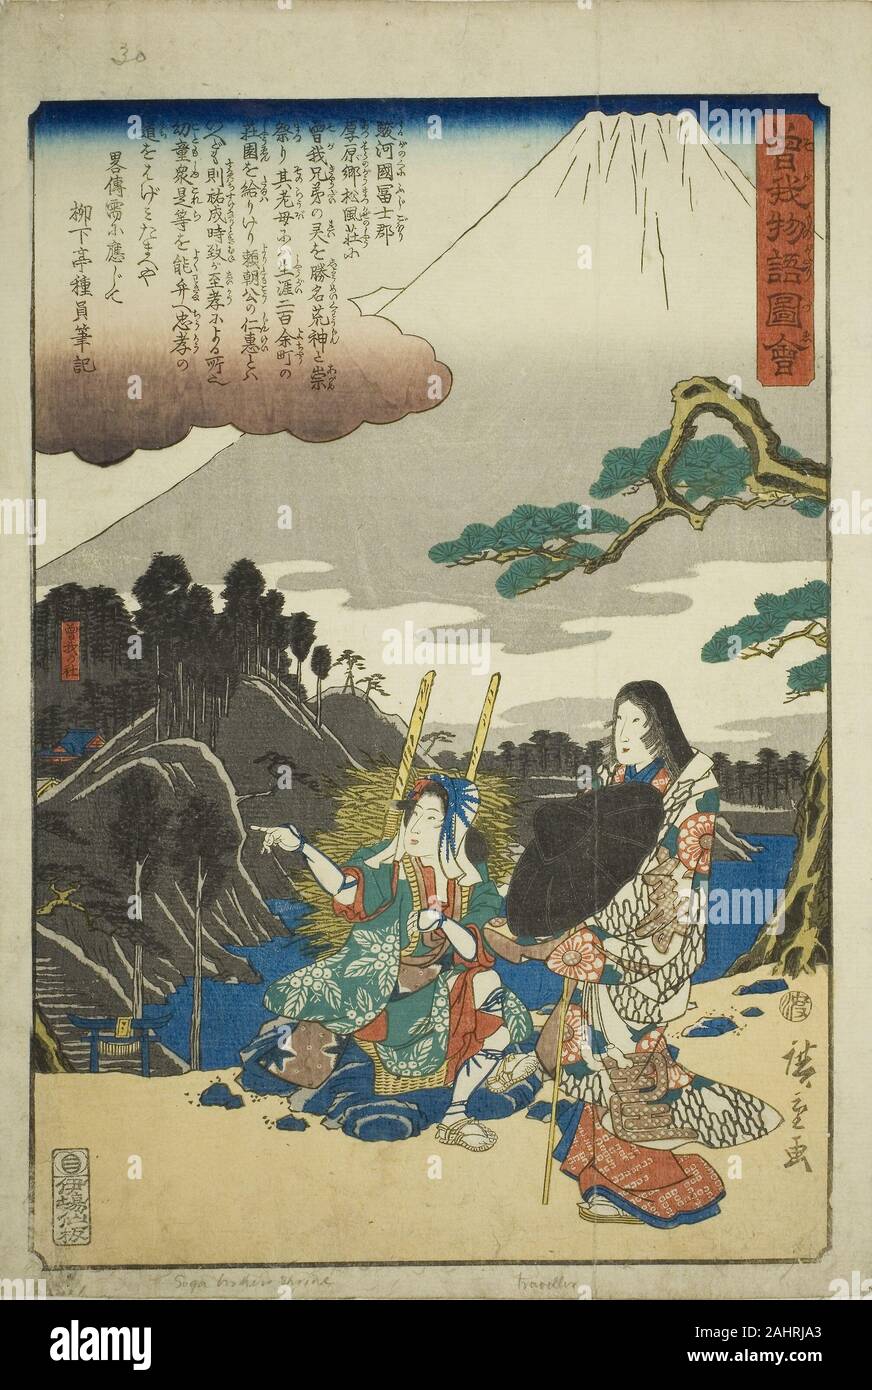 Utagawa Hiroshige. The Soga Shrine, from the series Illustrated